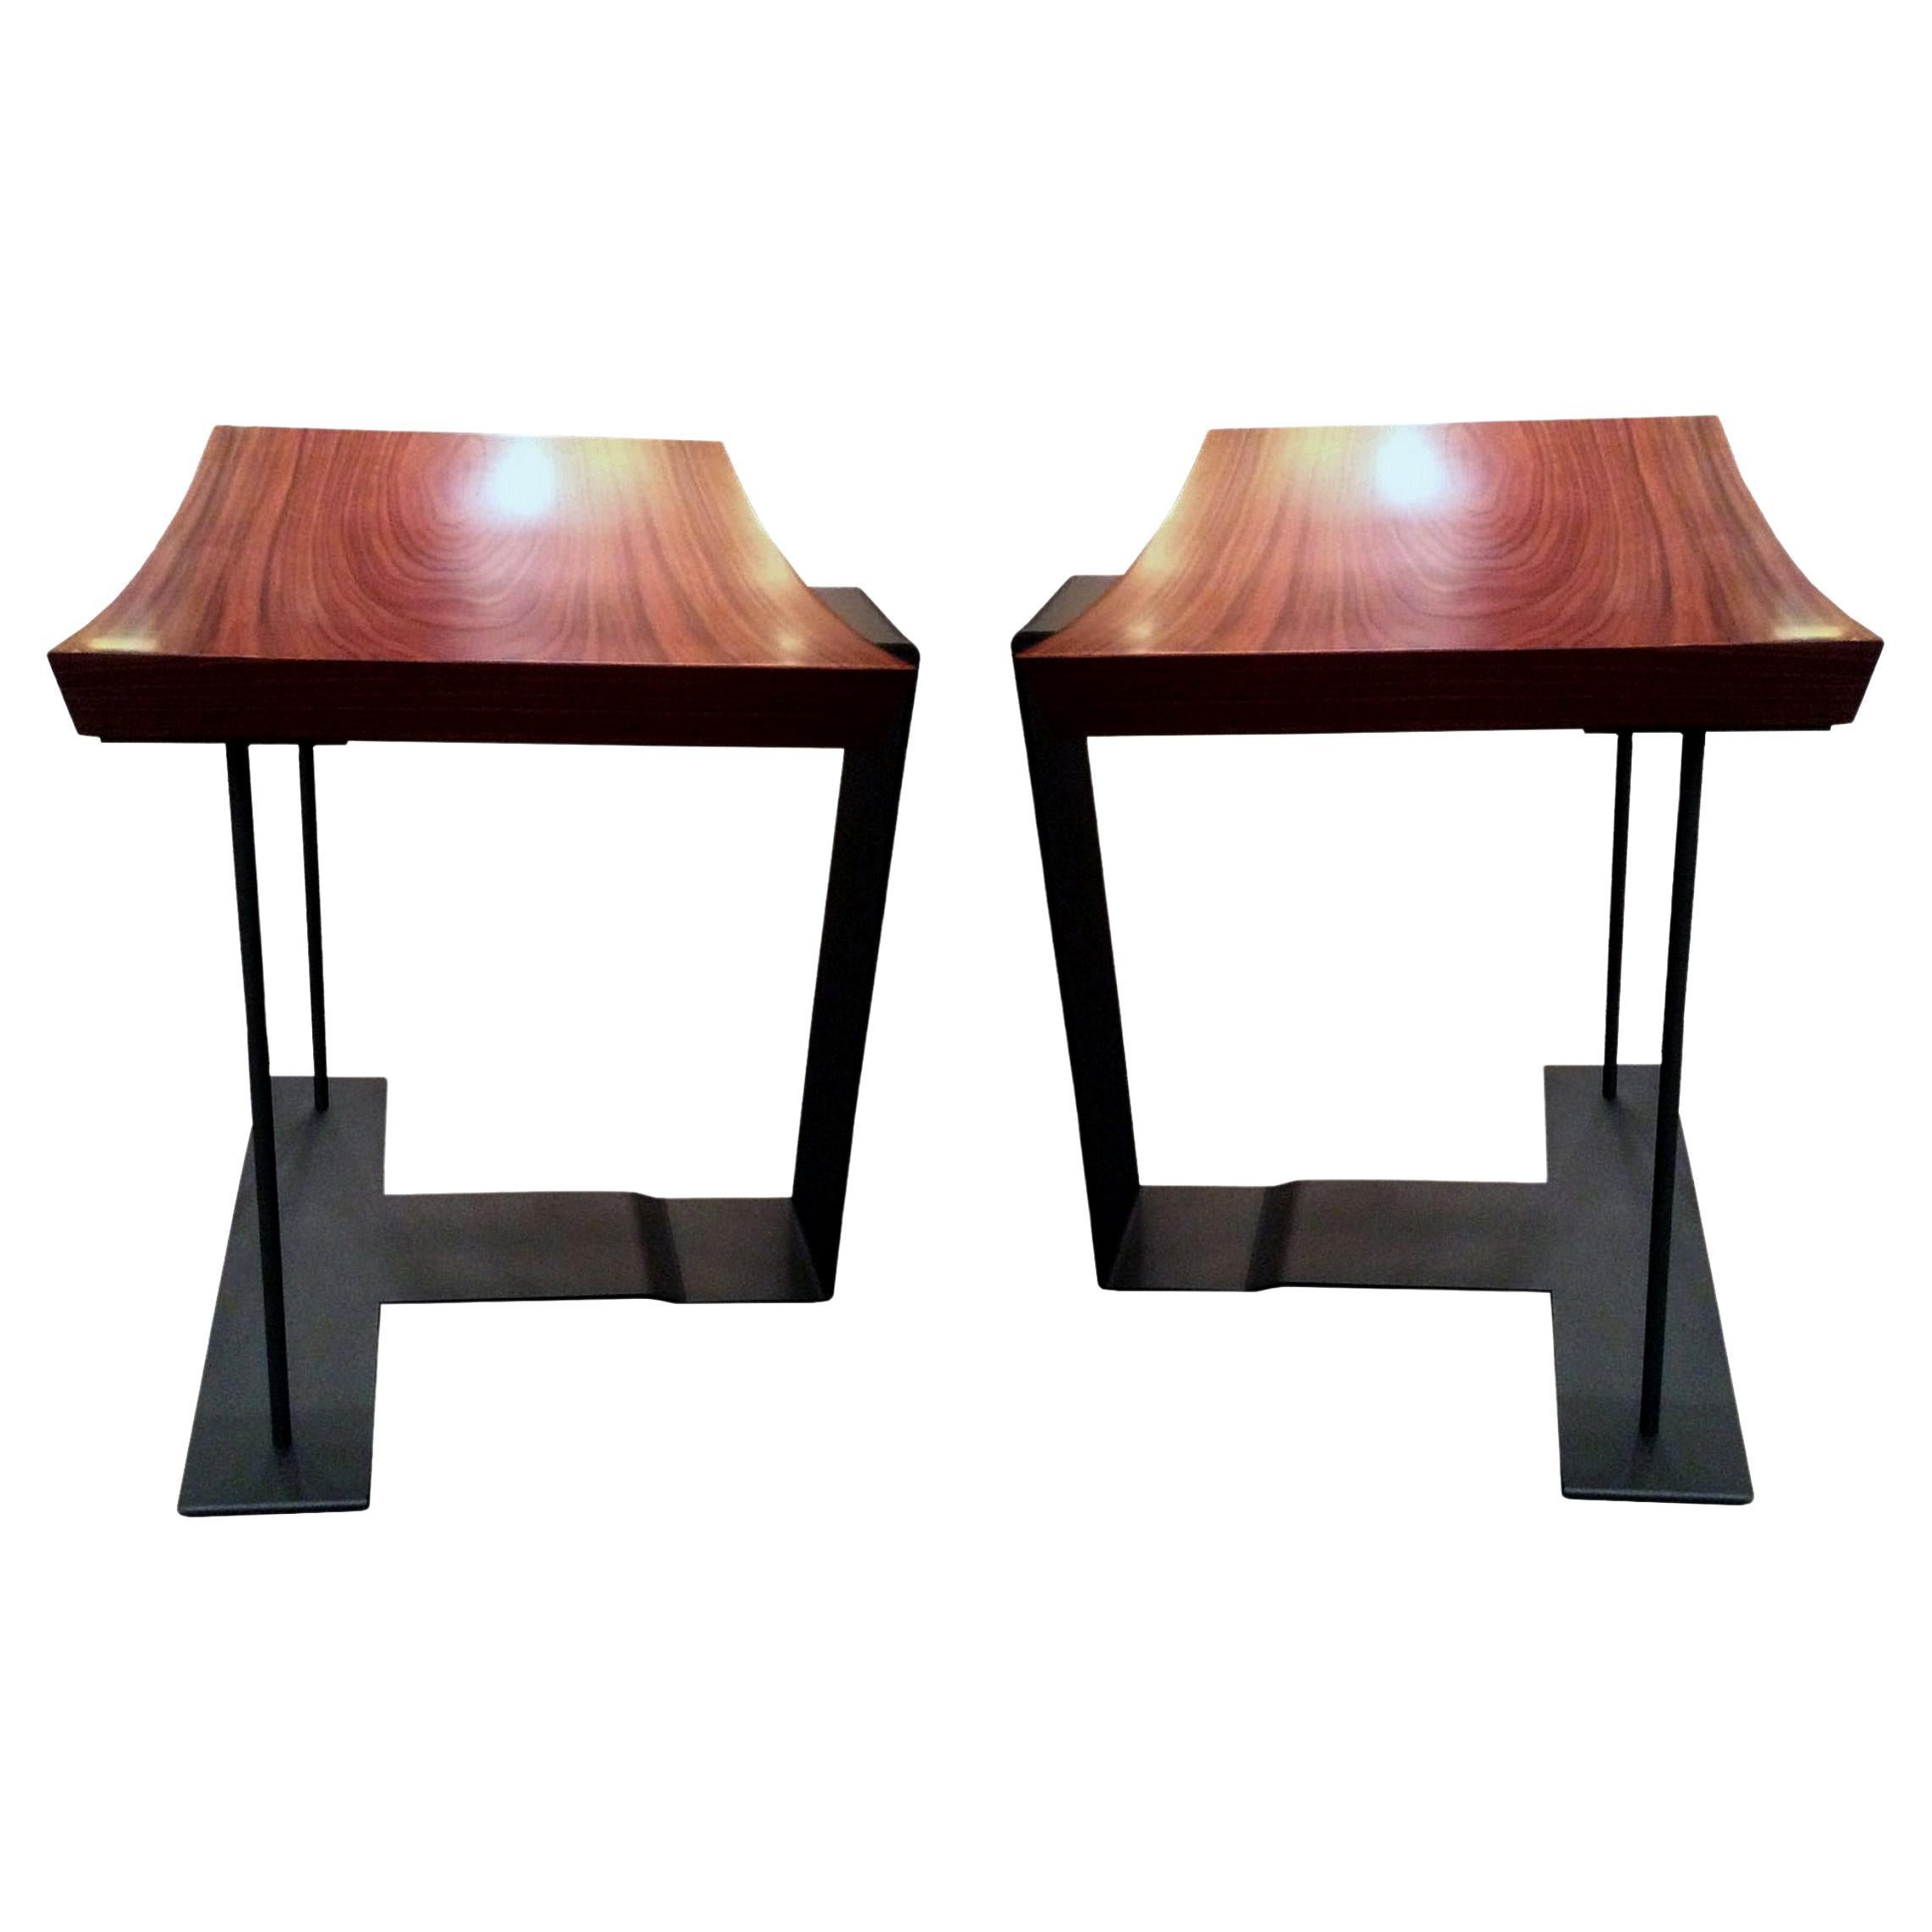 Two ��“T 1927” model stools, by Pierre Chareau, Ed. Ecart International, France